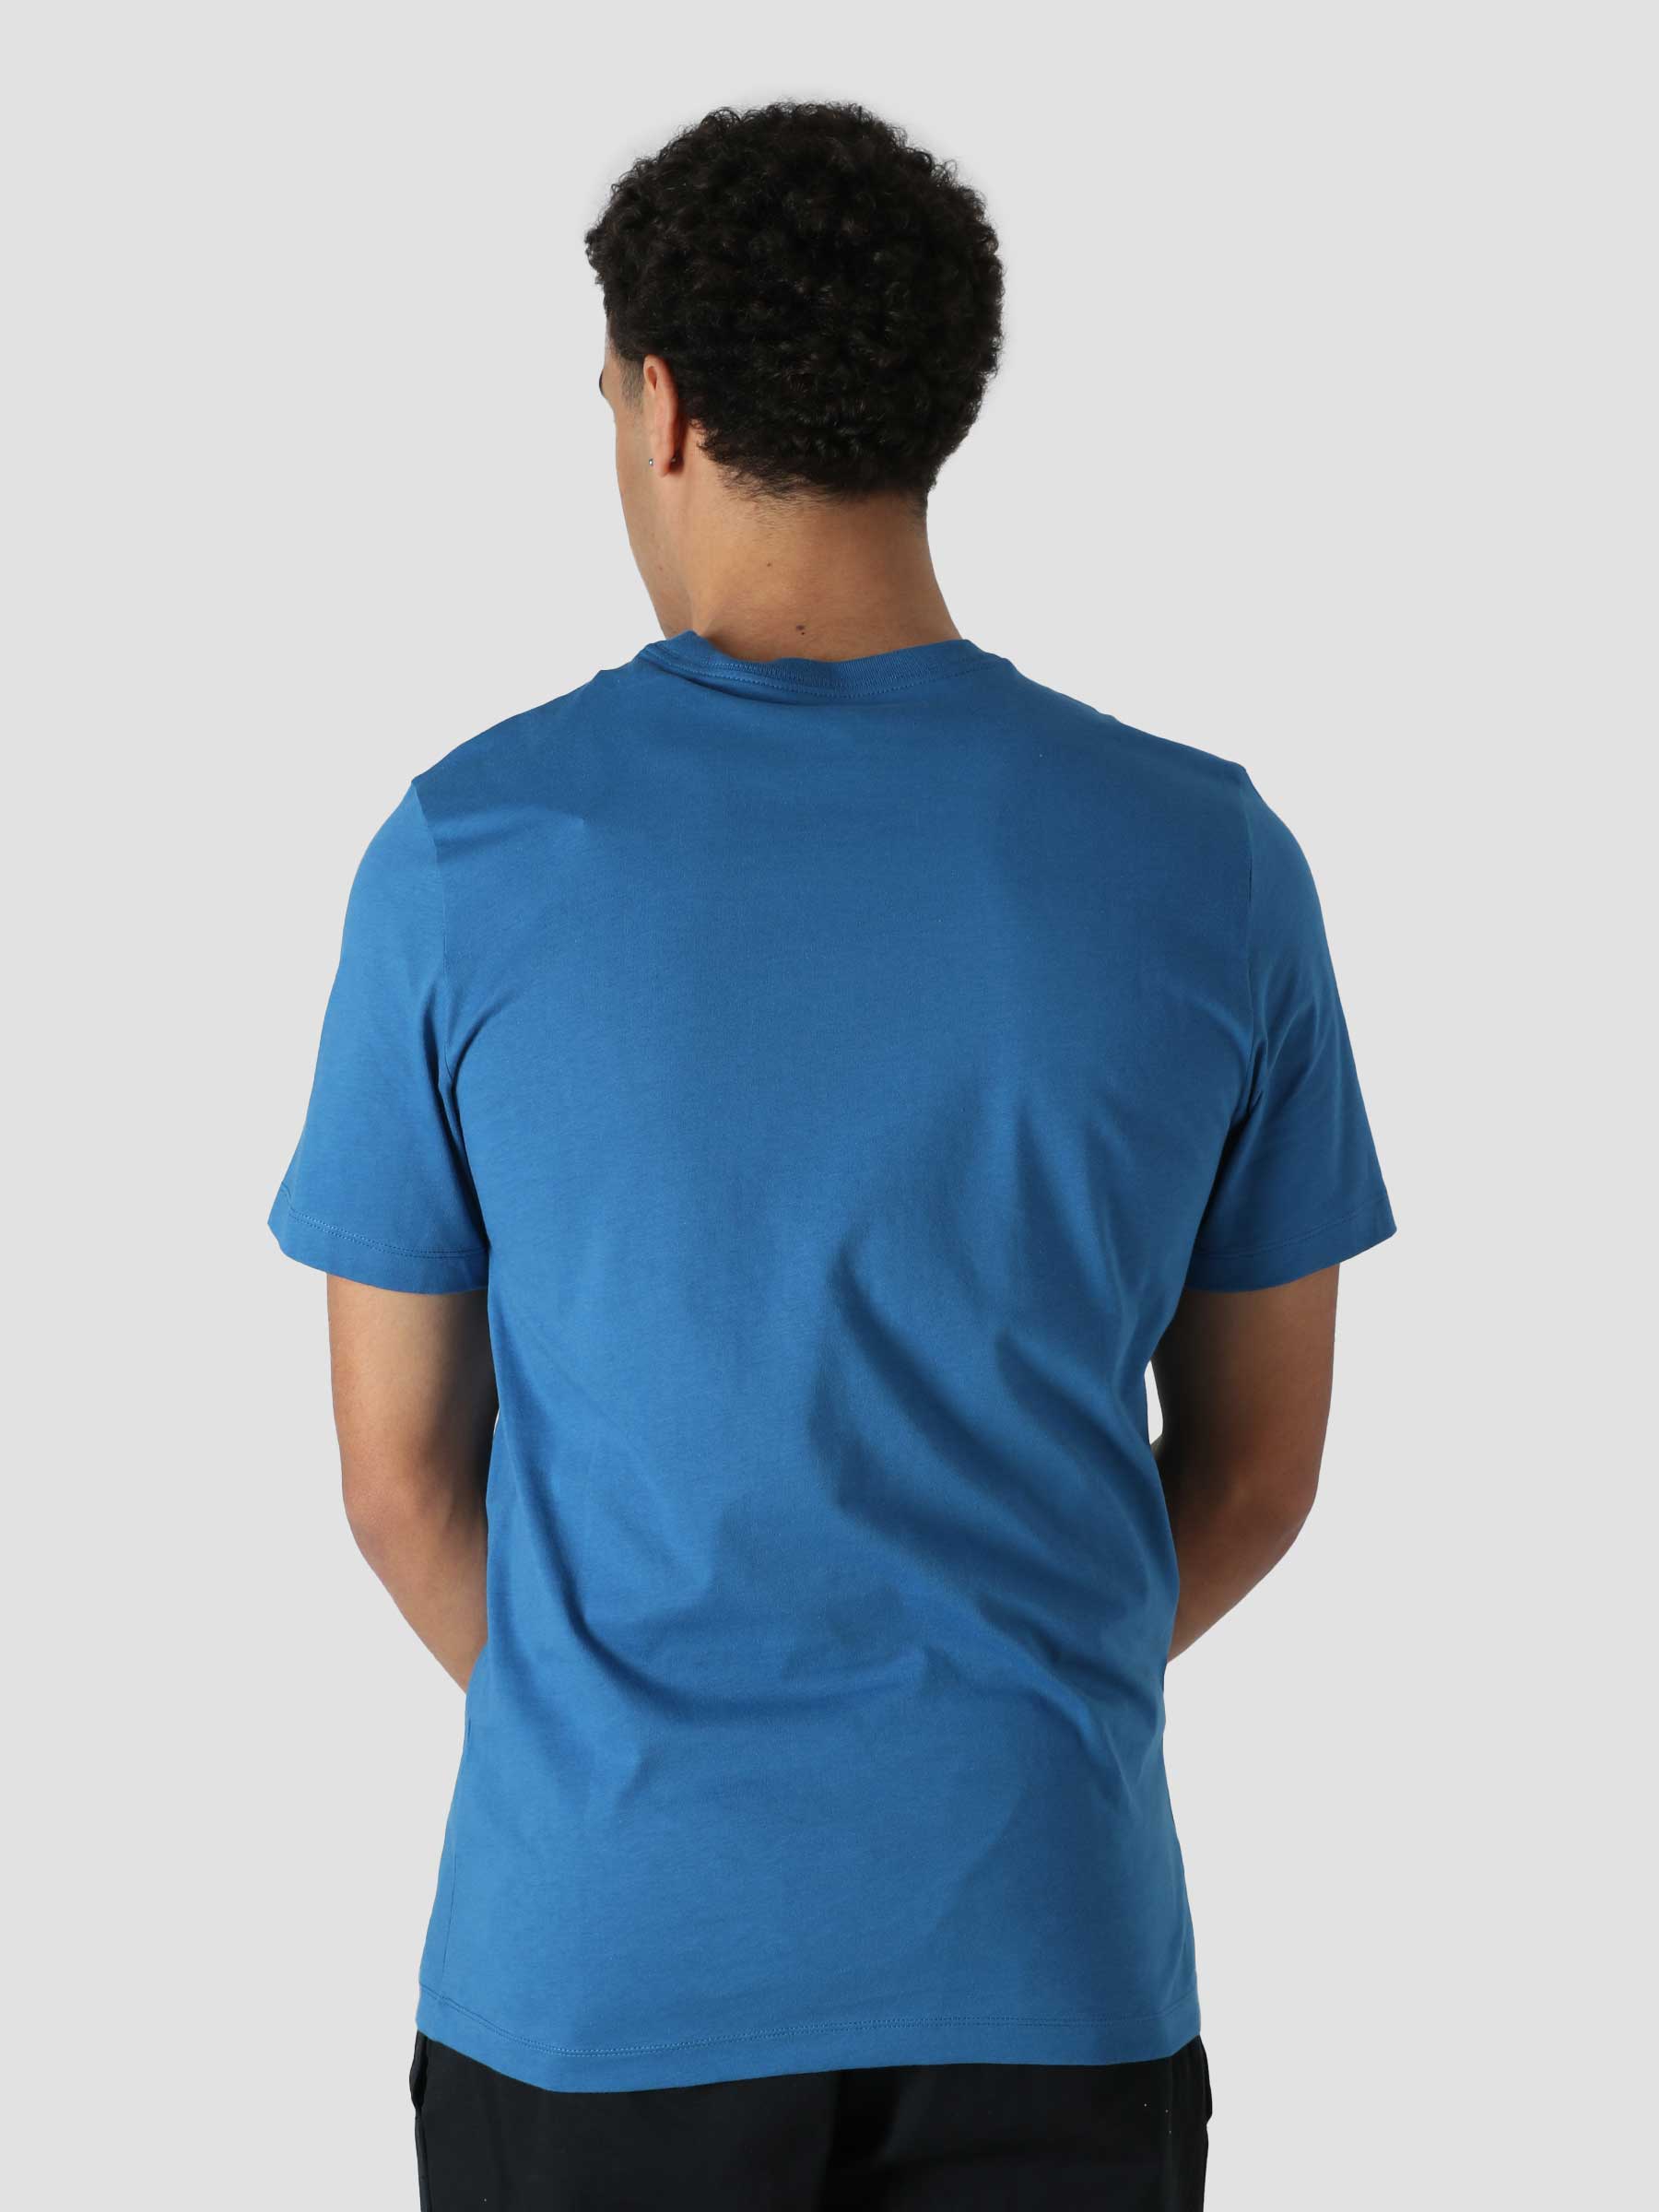 Nike M NSW Club T-Shirt Signal Blue White AR4997-403 | Freshcotton